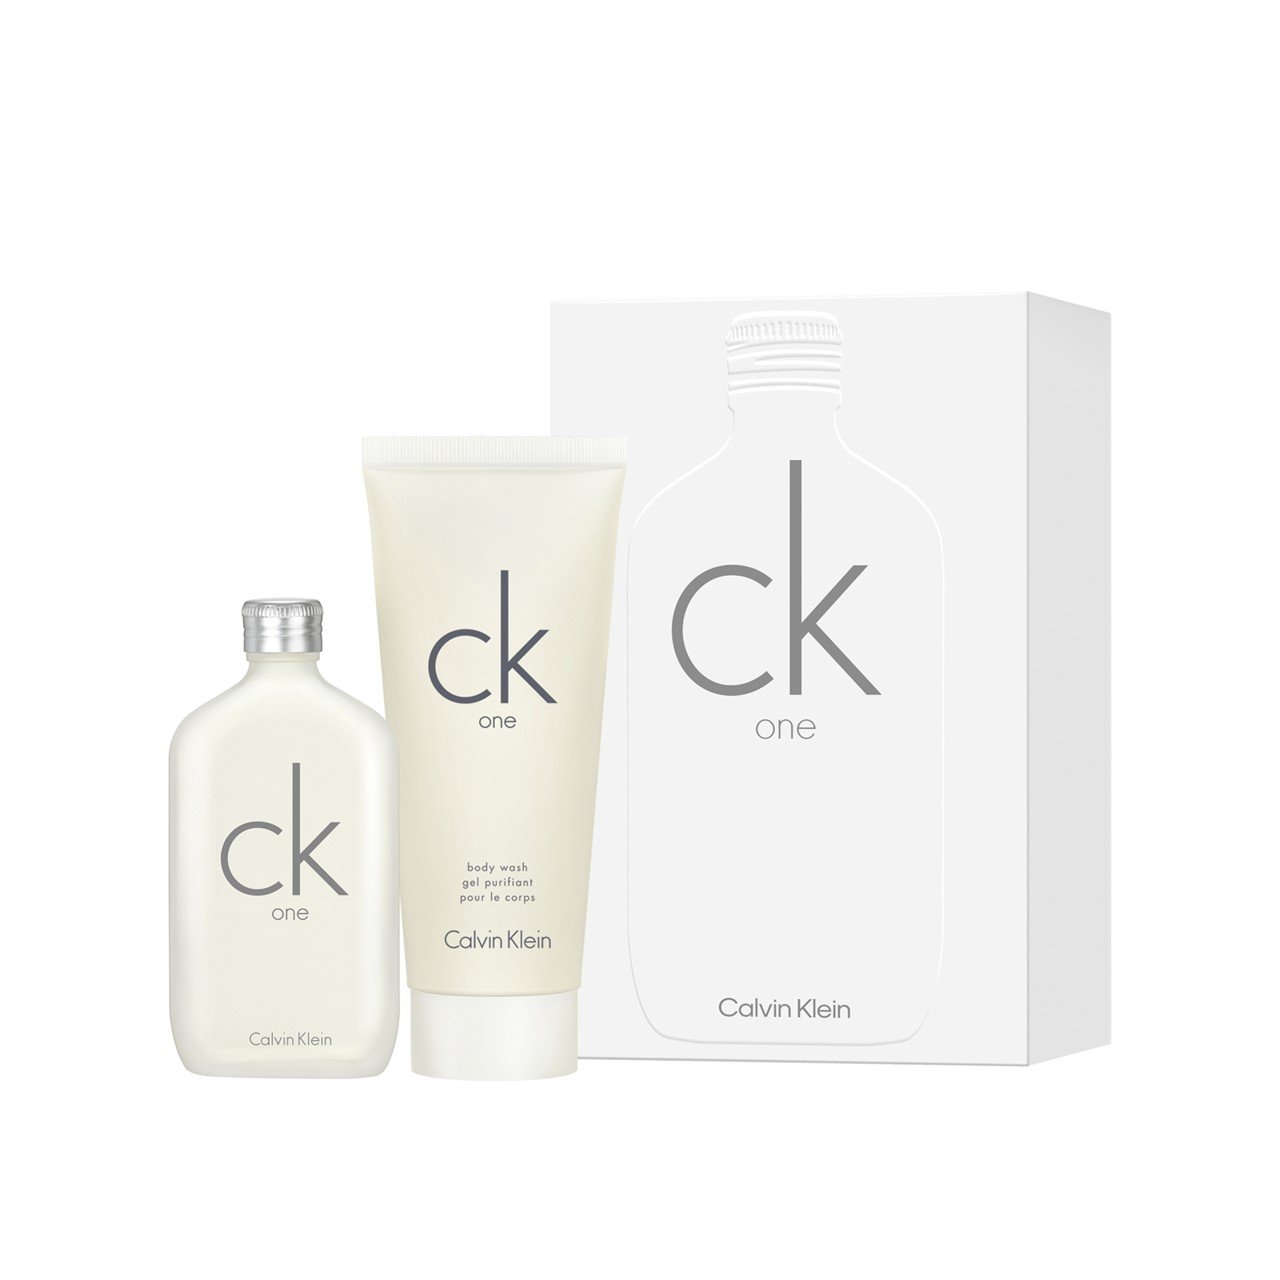 Buy Calvin Klein CK One Eau de Toilette 50ml + Body Wash 100ml